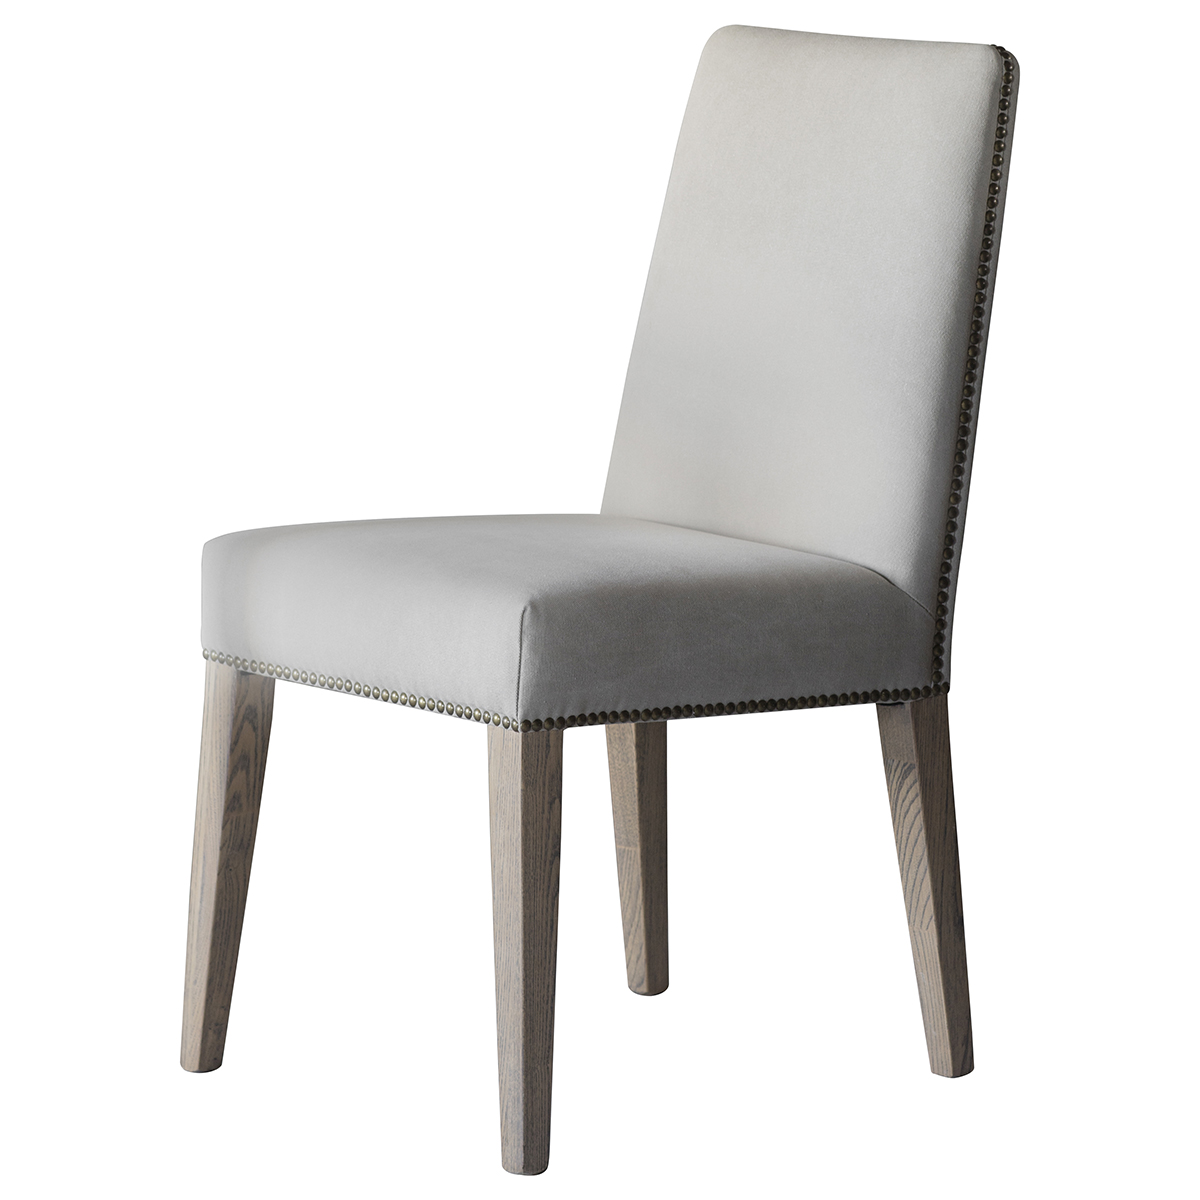 Gallery Direct Rex Dining Chair Cement Linen (Set of 2)